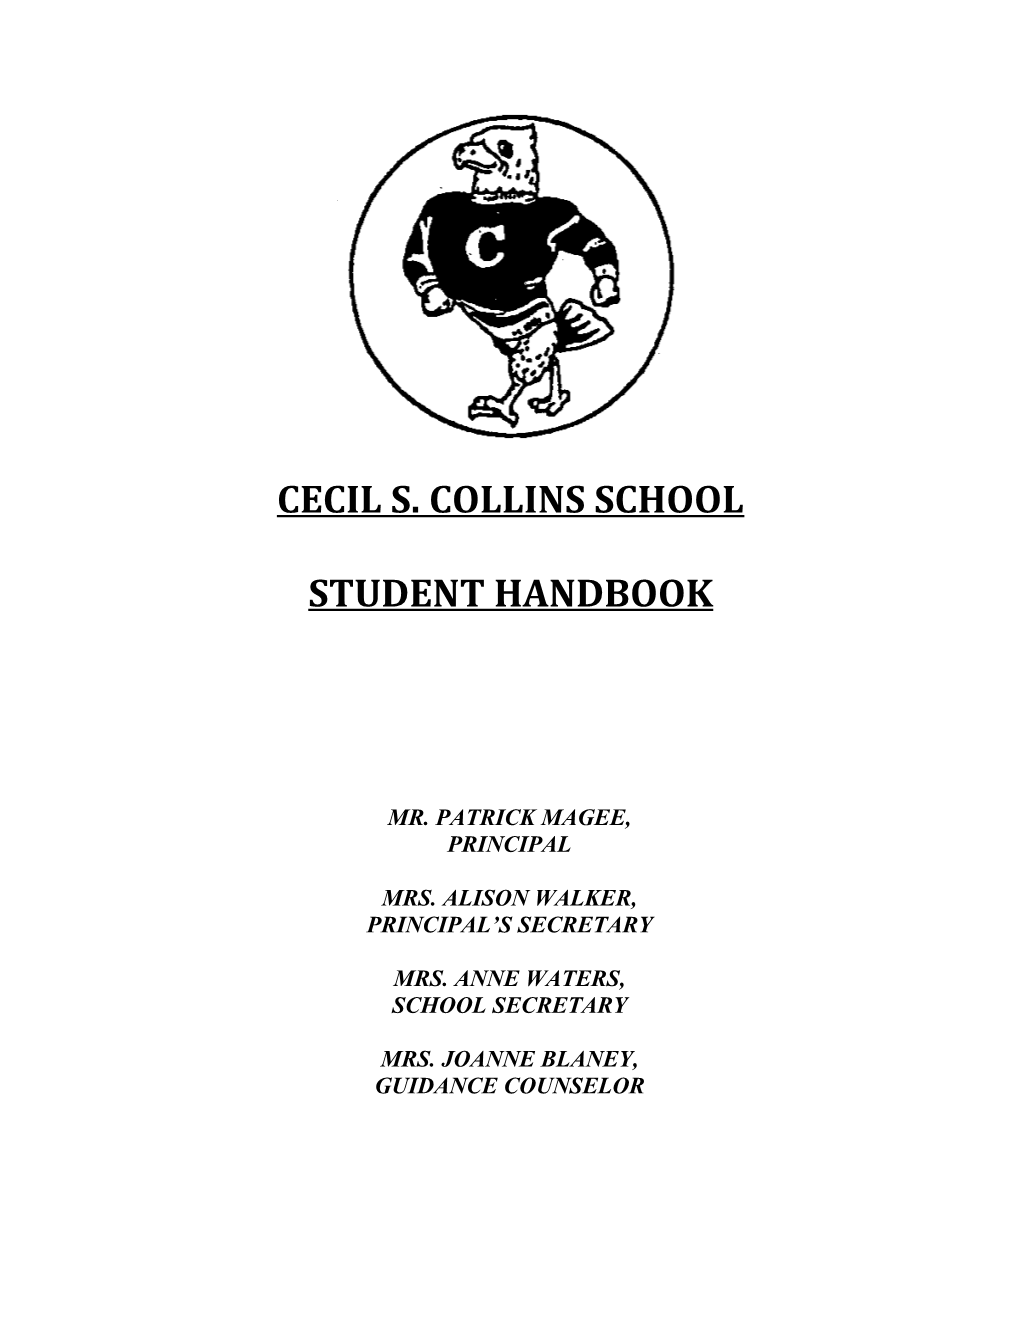 Cecil S. Collins School